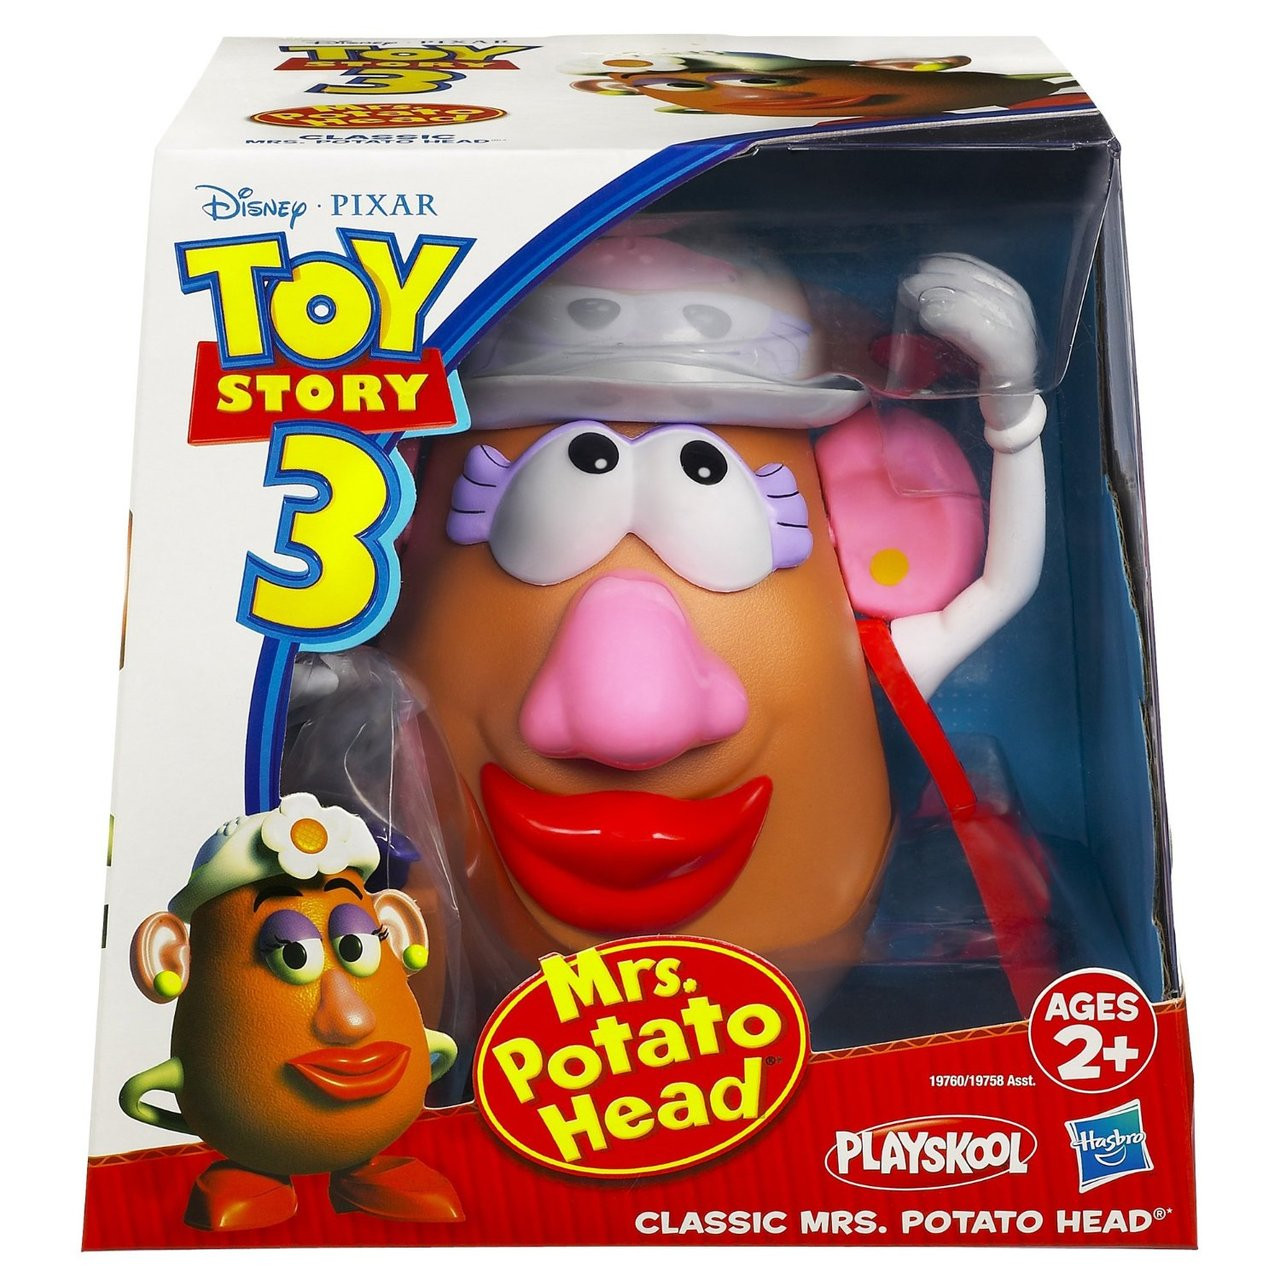 Playskool Toy Story 3 Classic Mrs. Potato Head - For Moms